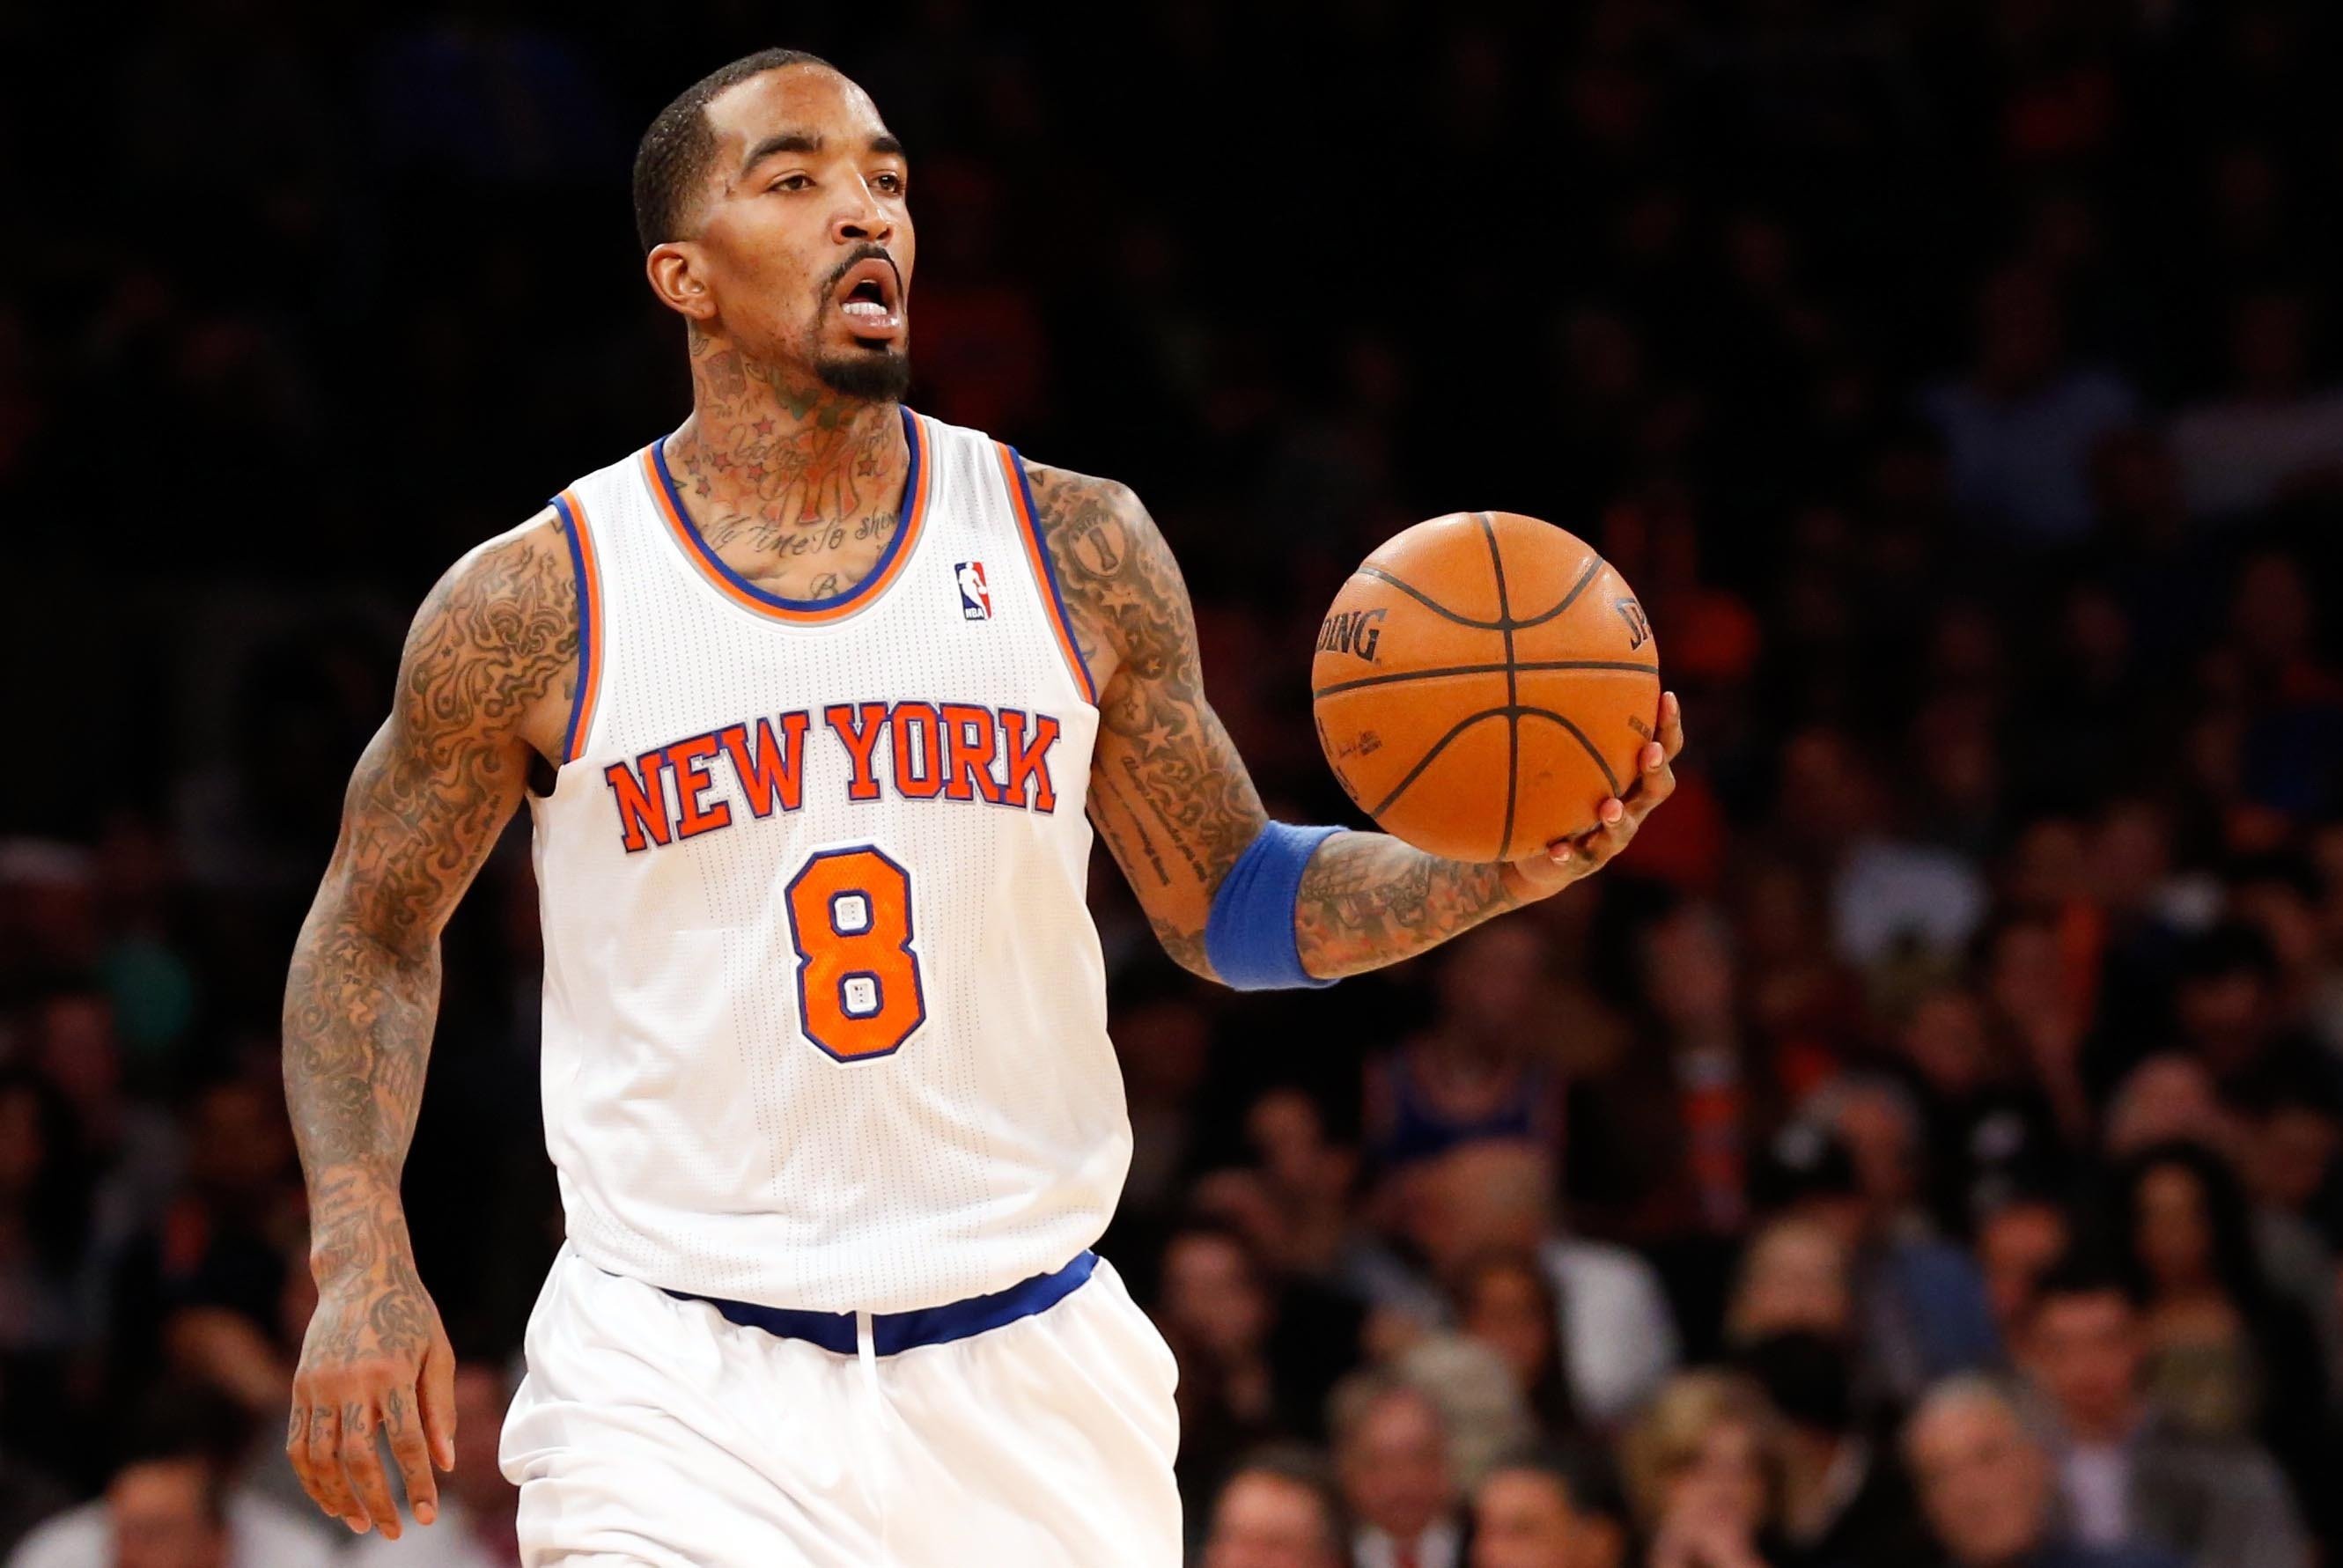 JR Smith of Knicks wins NBA Sixth Man of the Year award, says